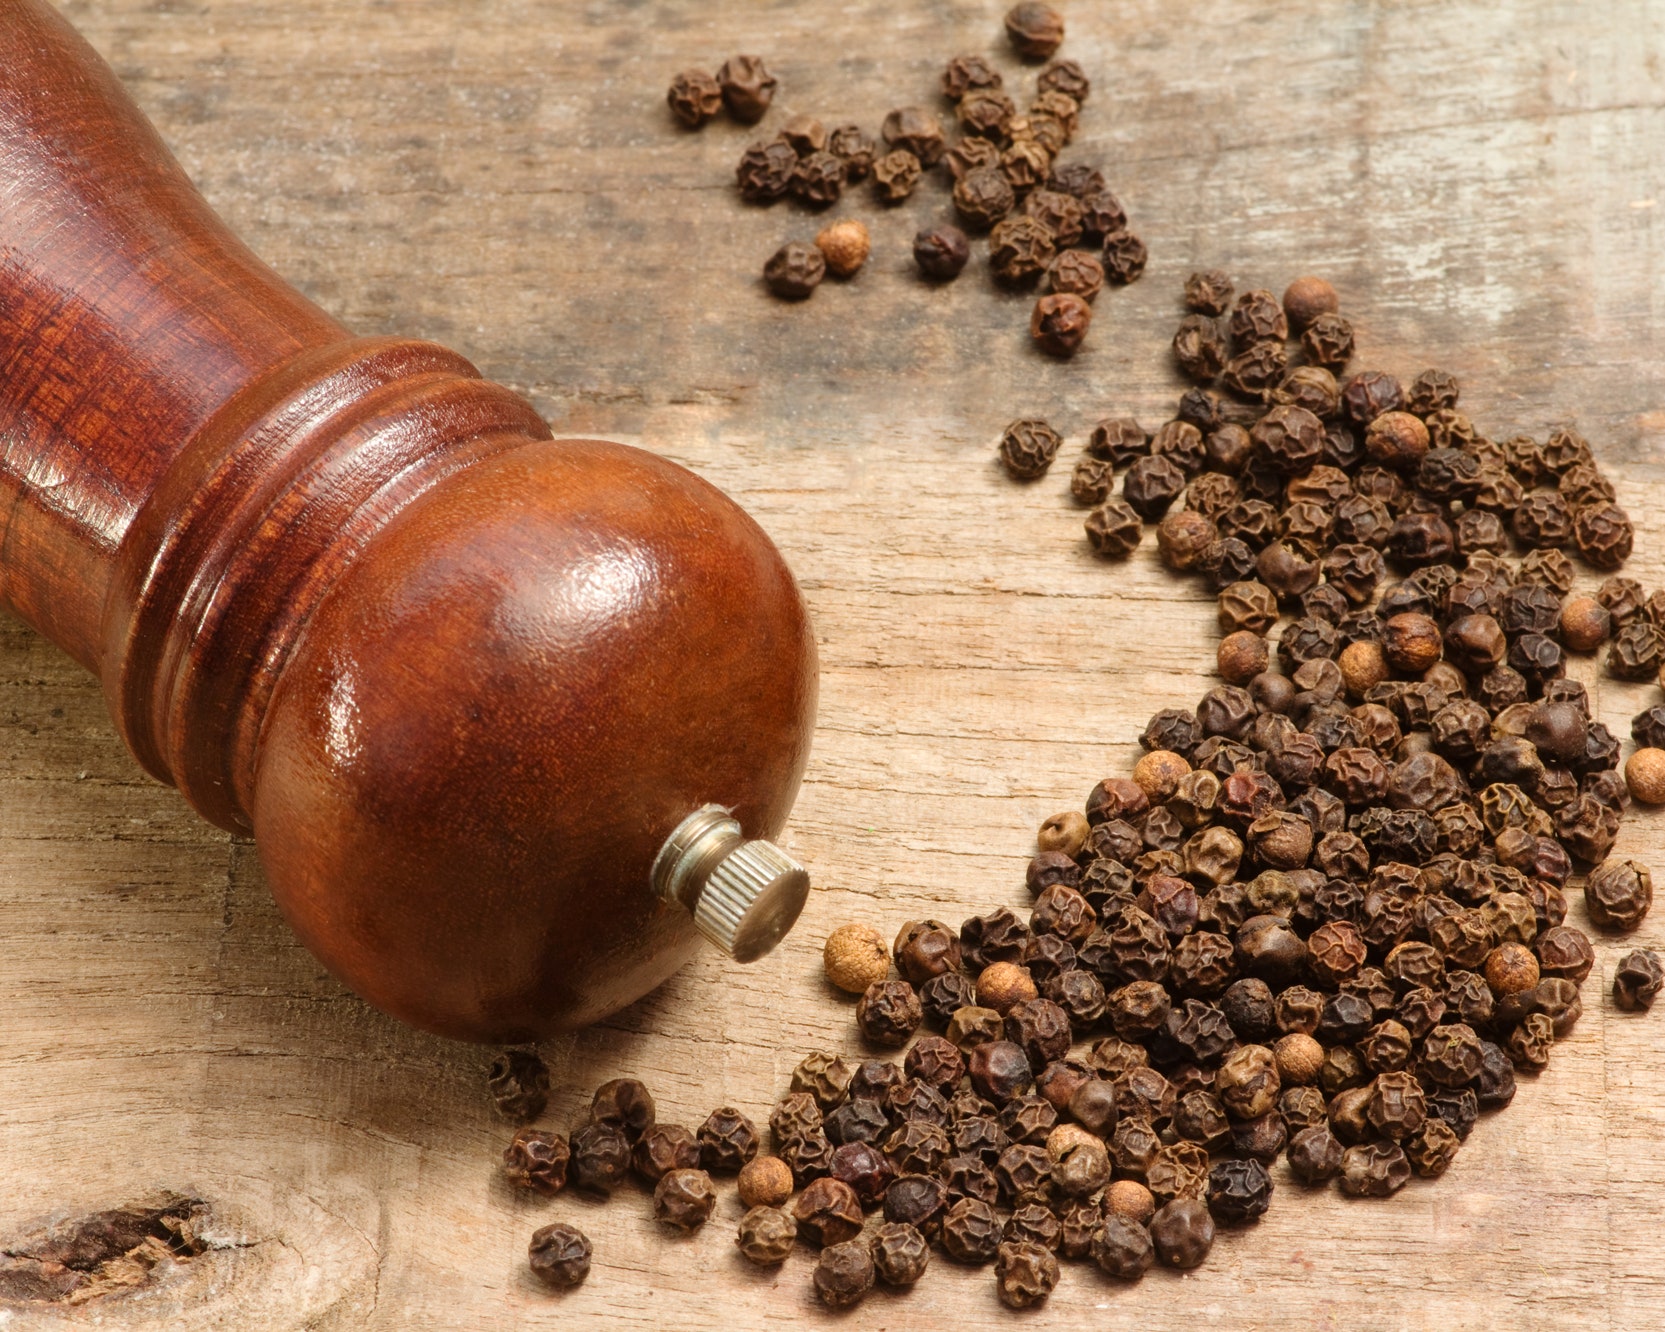 how does a salt grinder help to enhance the flavor of food